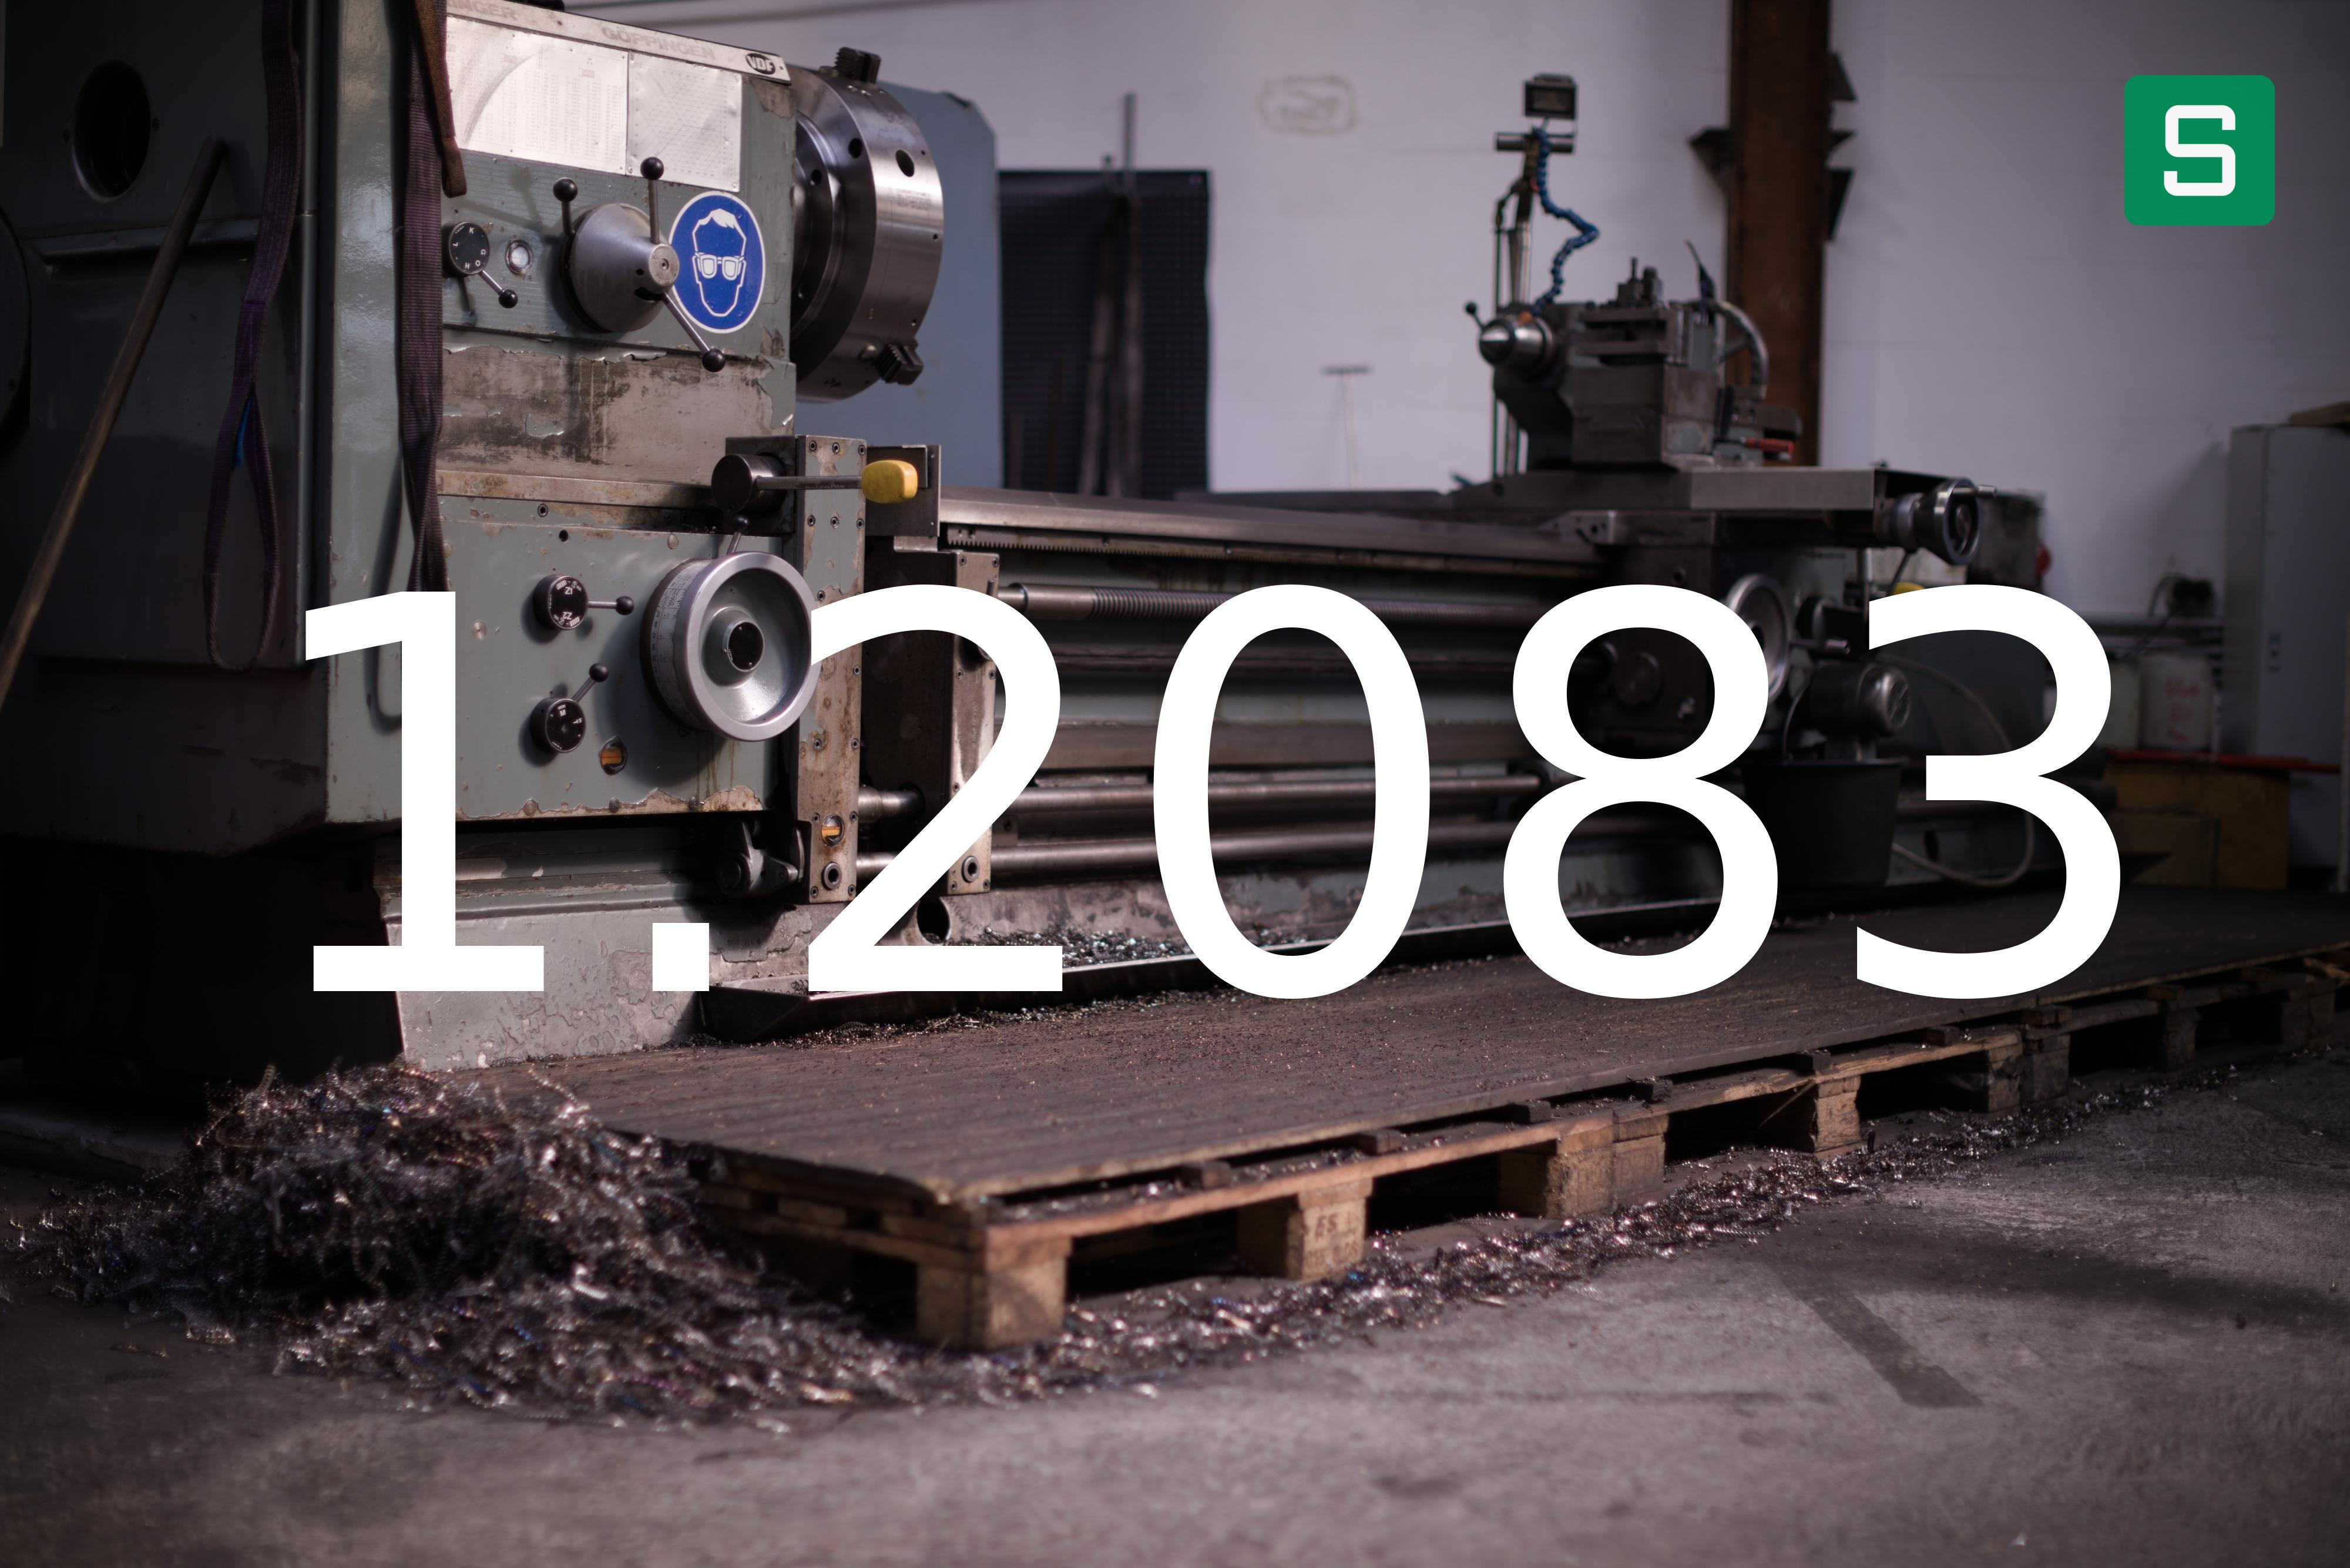 Steel Material: 1.2083